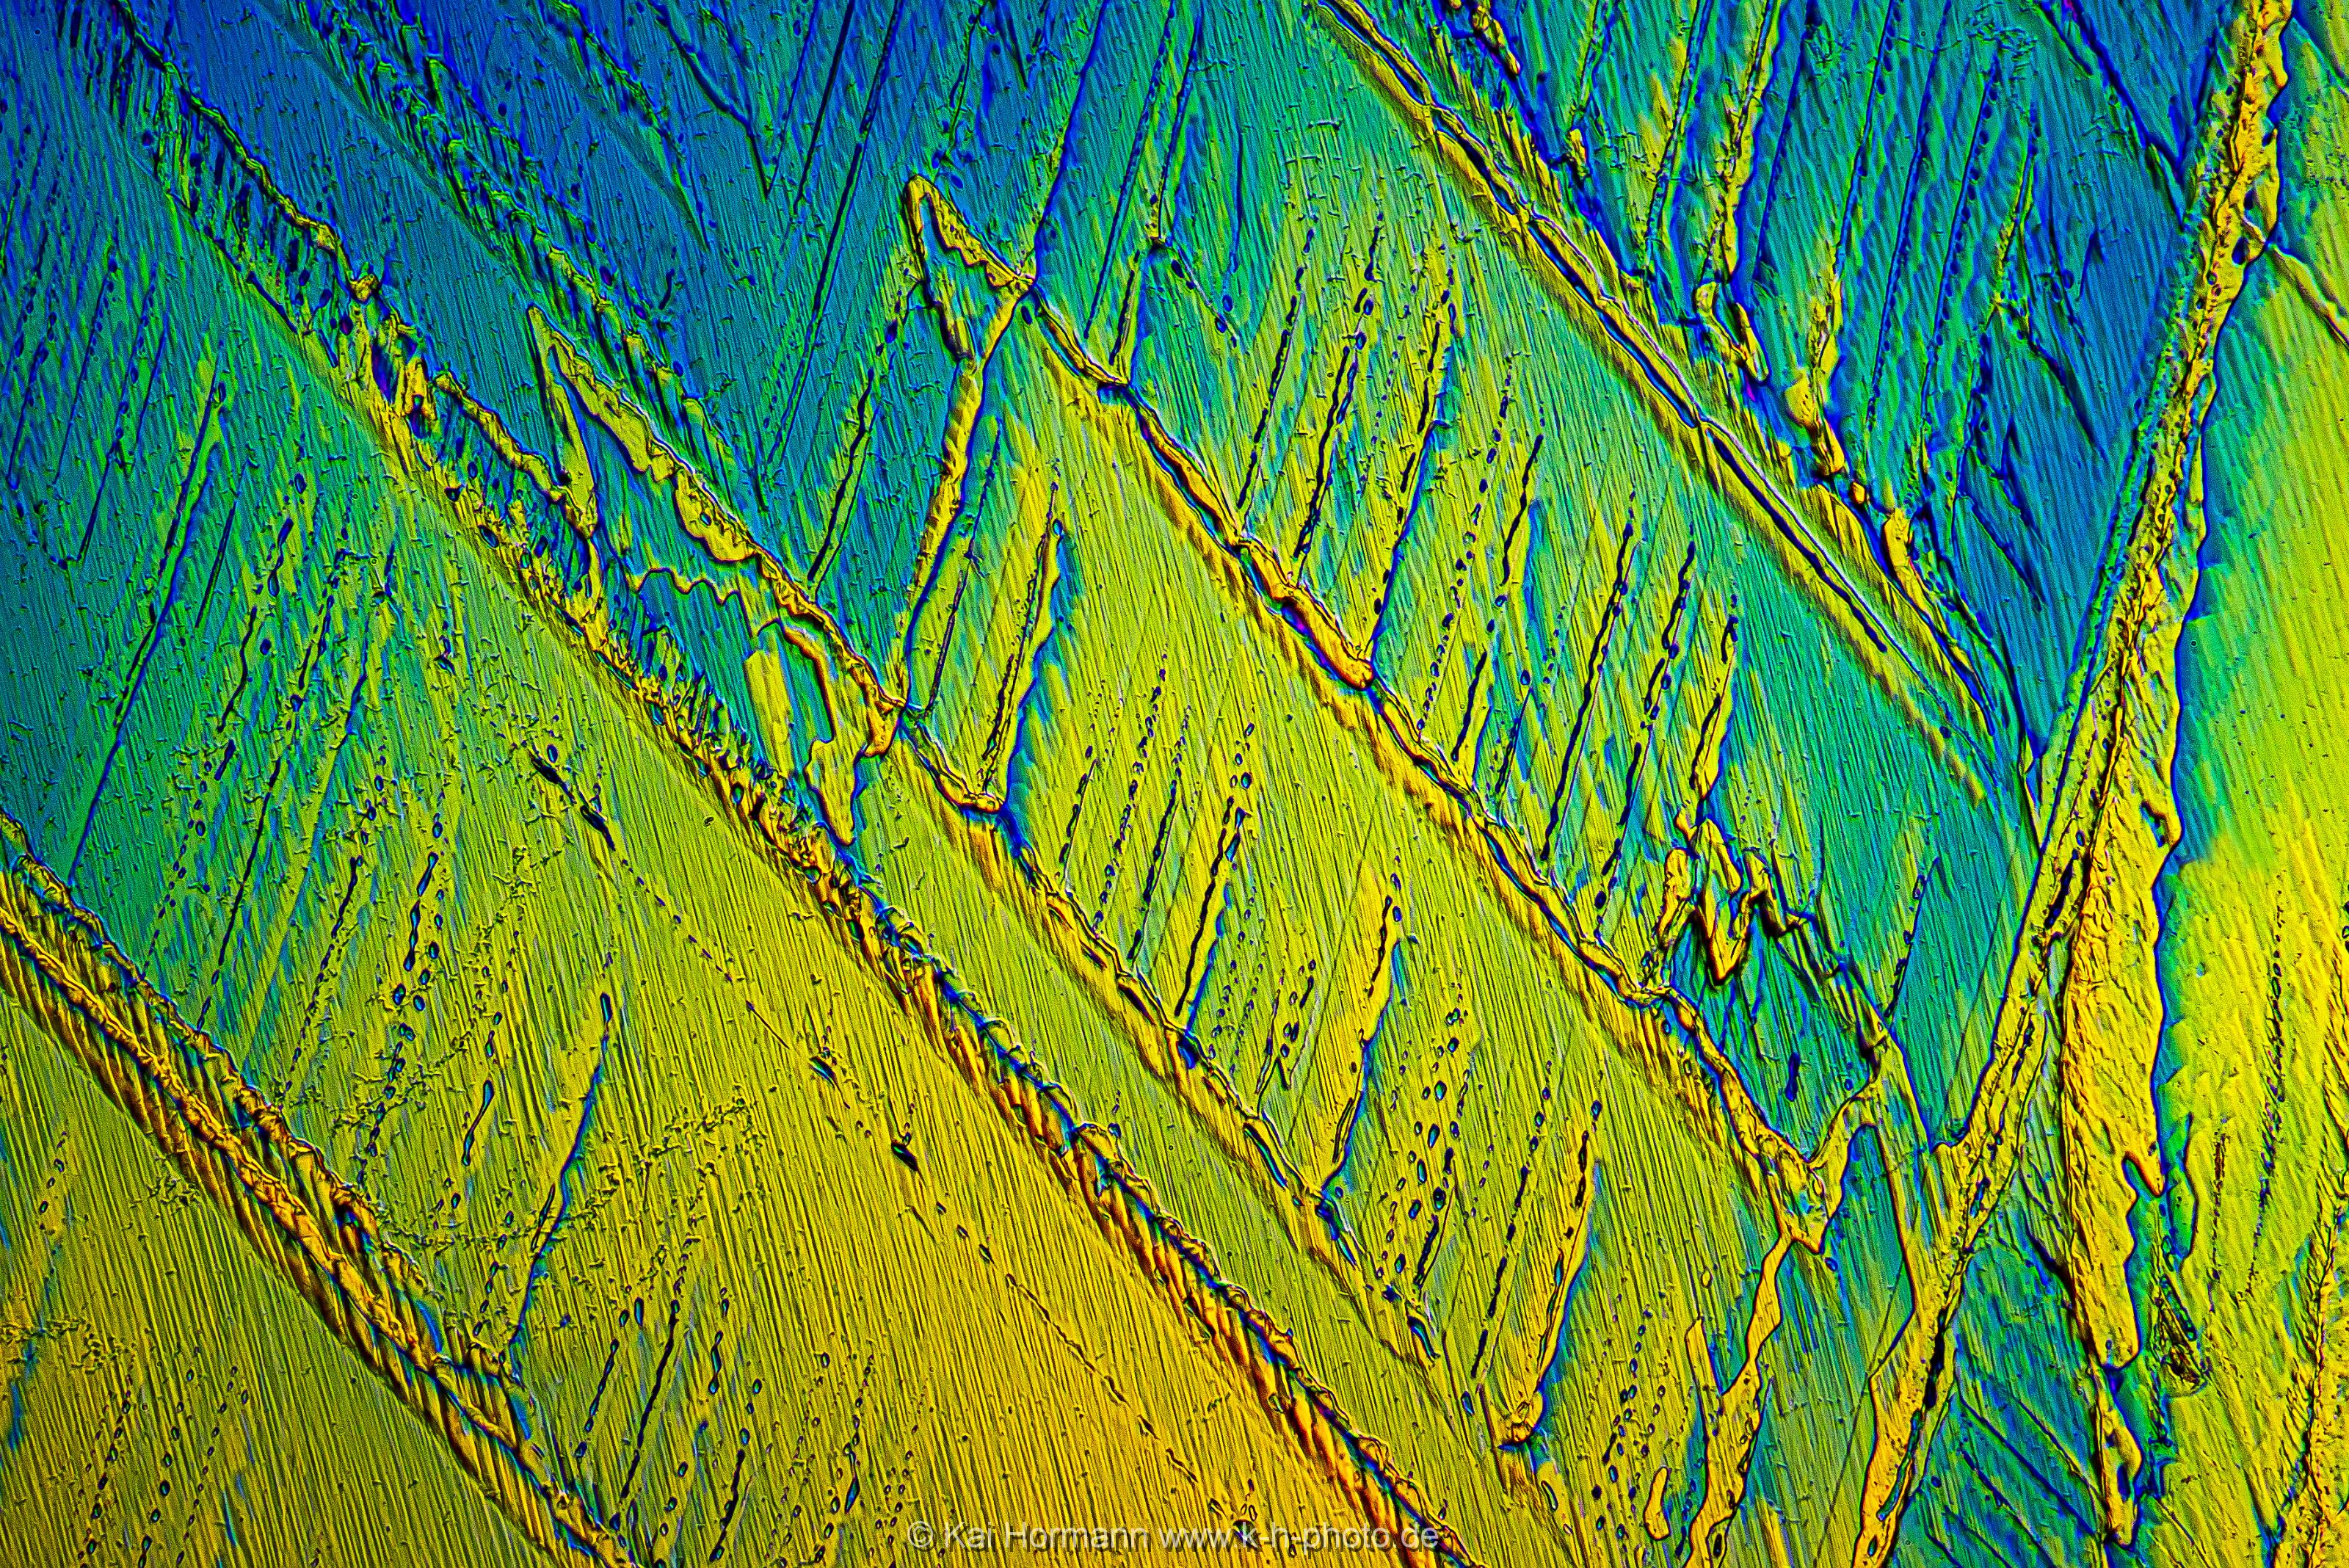 Kupfersulfat Mikrokristalle im polarisierten Licht.